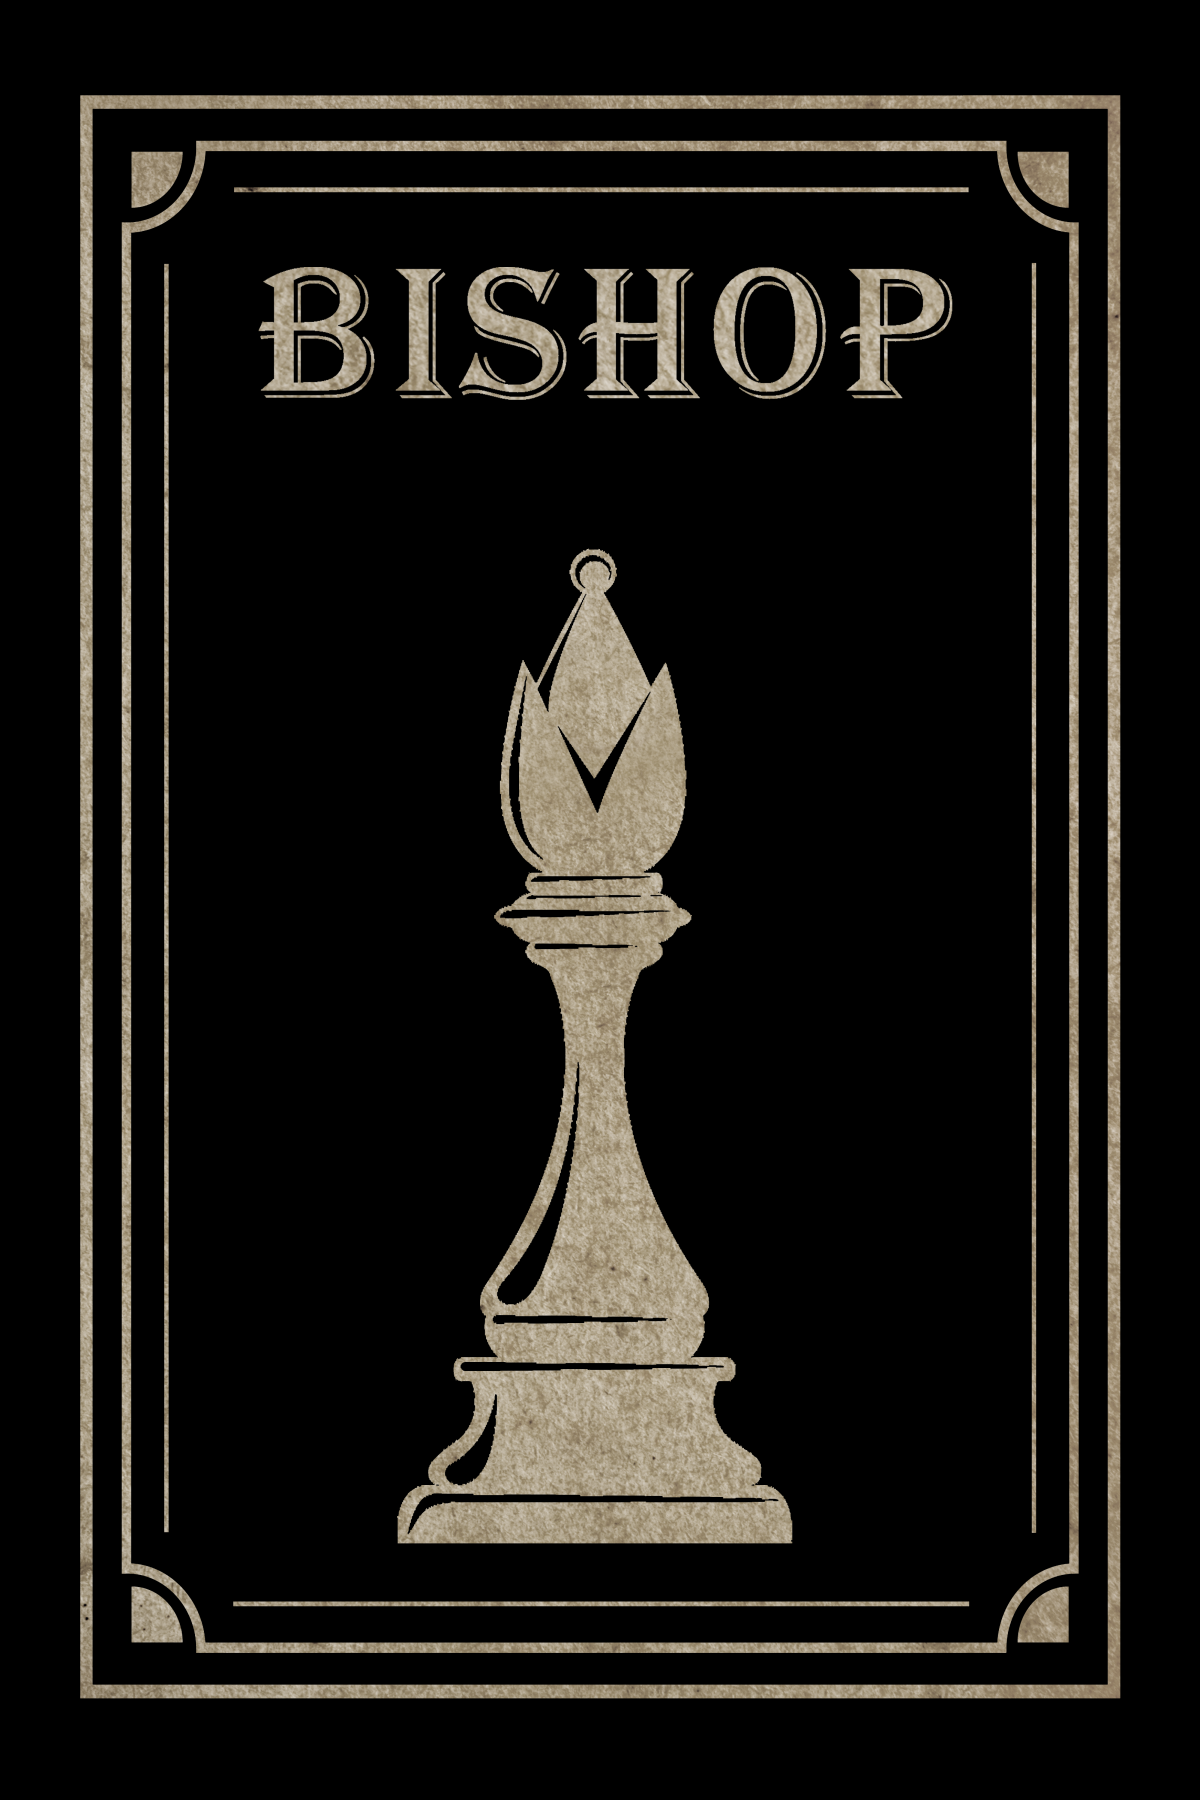 Chess Bishop